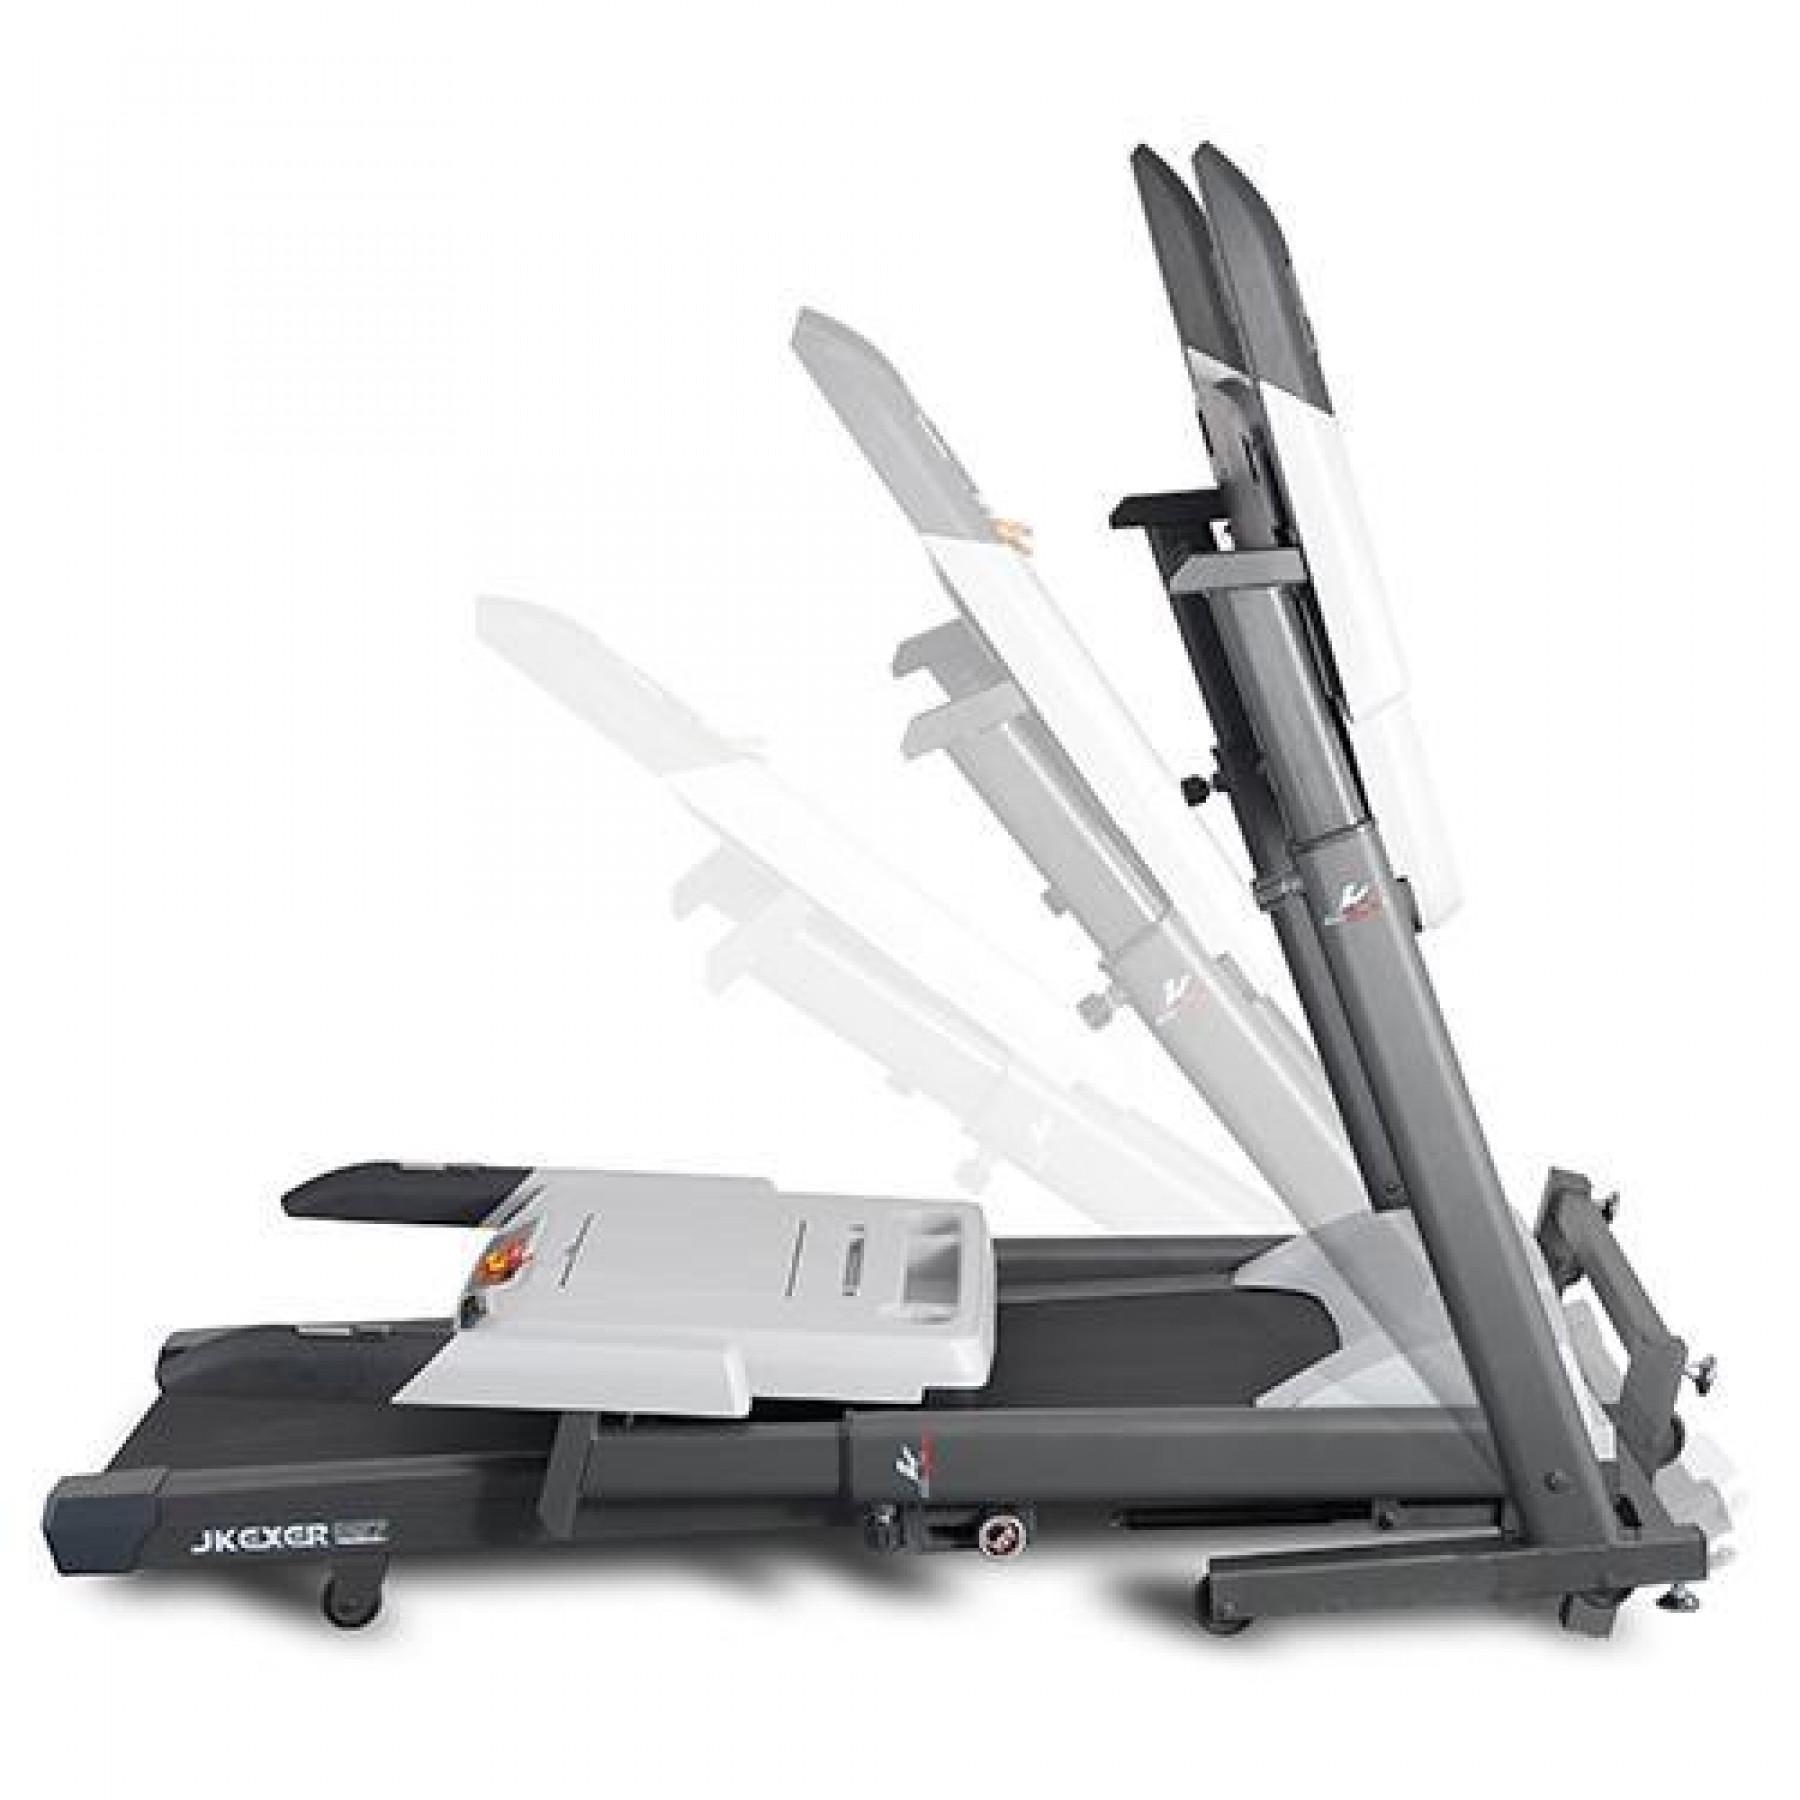 Aero Work Treadmill Treadmill Desk Evo Cardio